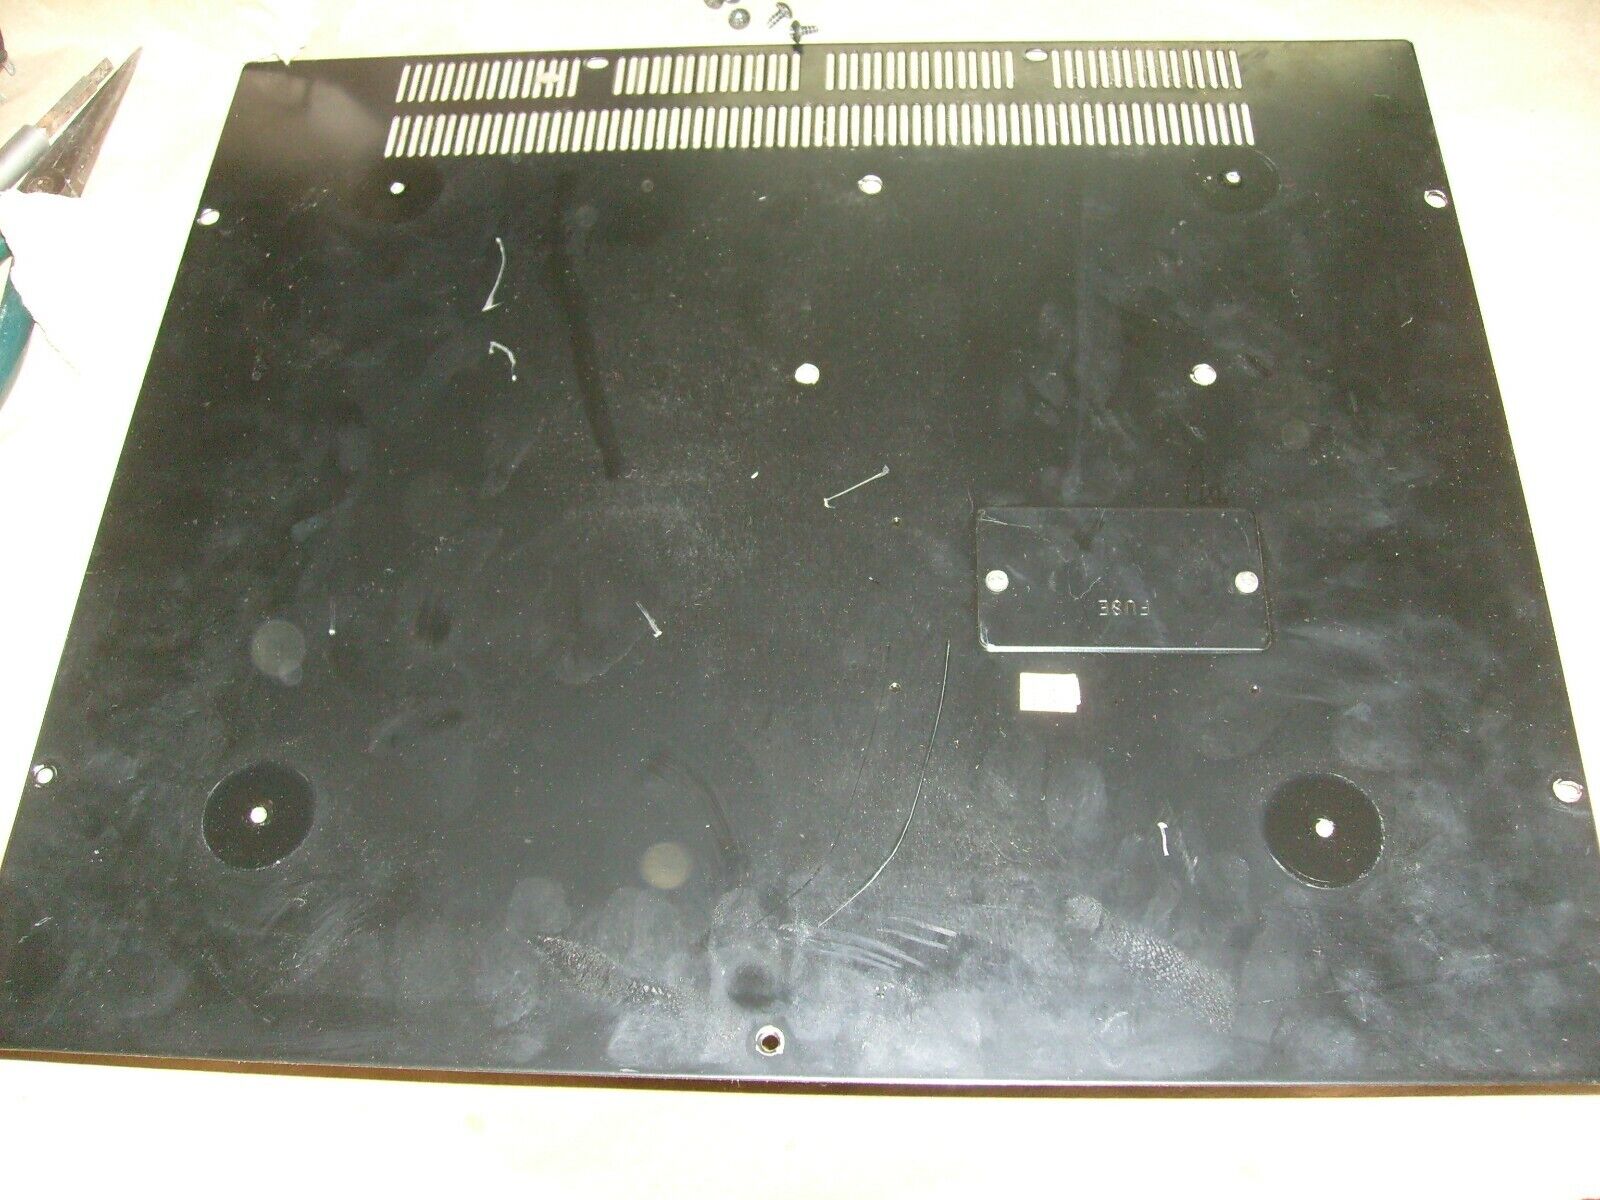  Pioneer SA-9500 Amplifier - Original Metal Bottom Panel with Case screws